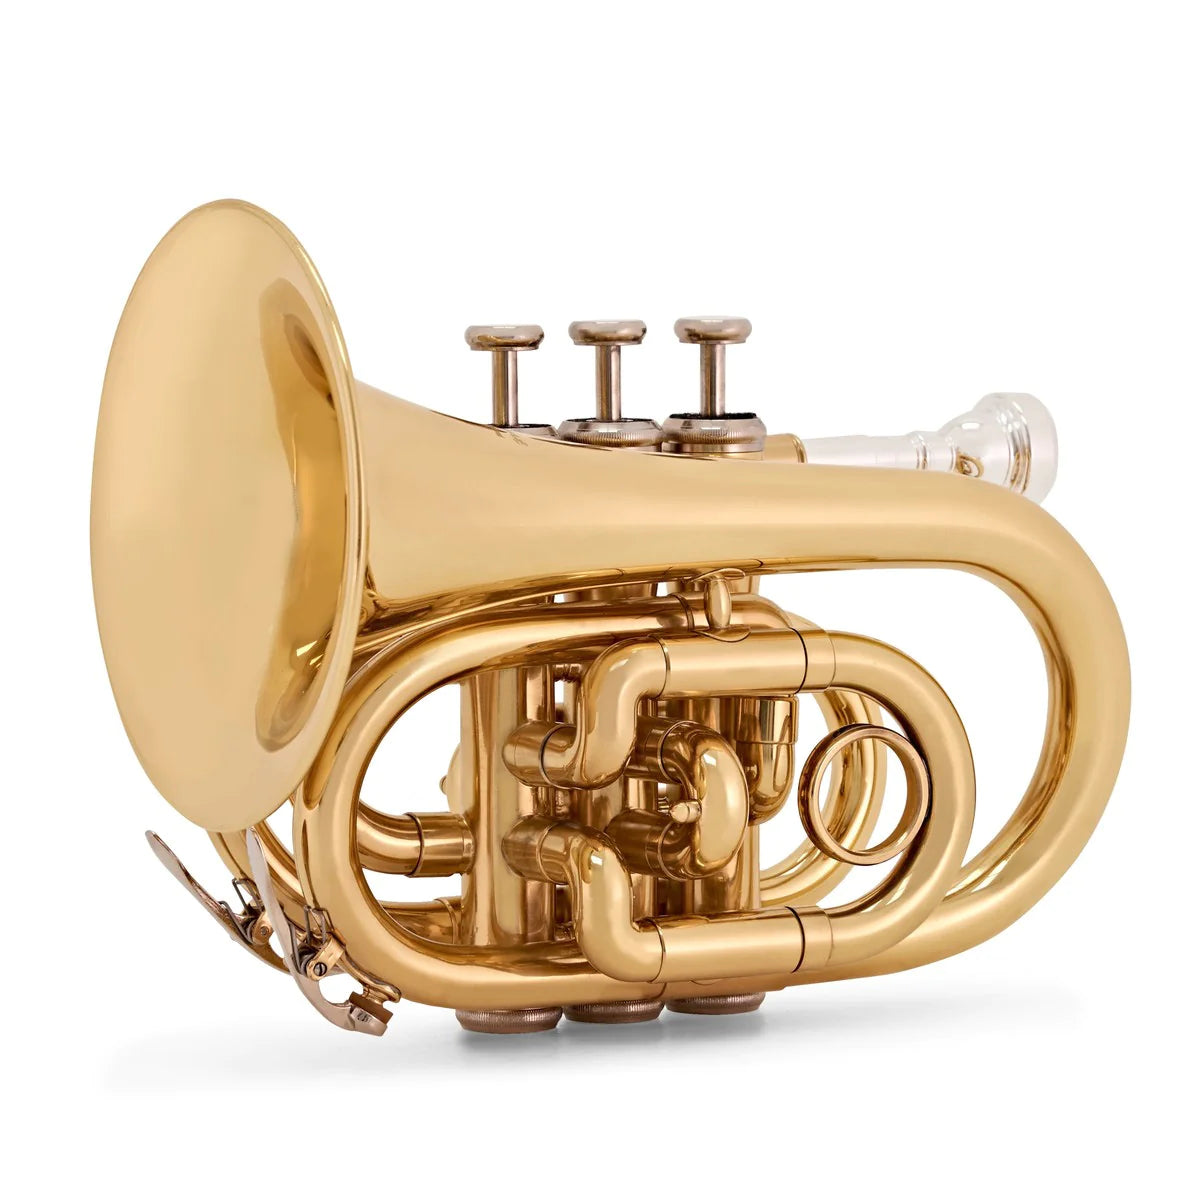 Elkhart series 1 pocket trumpet